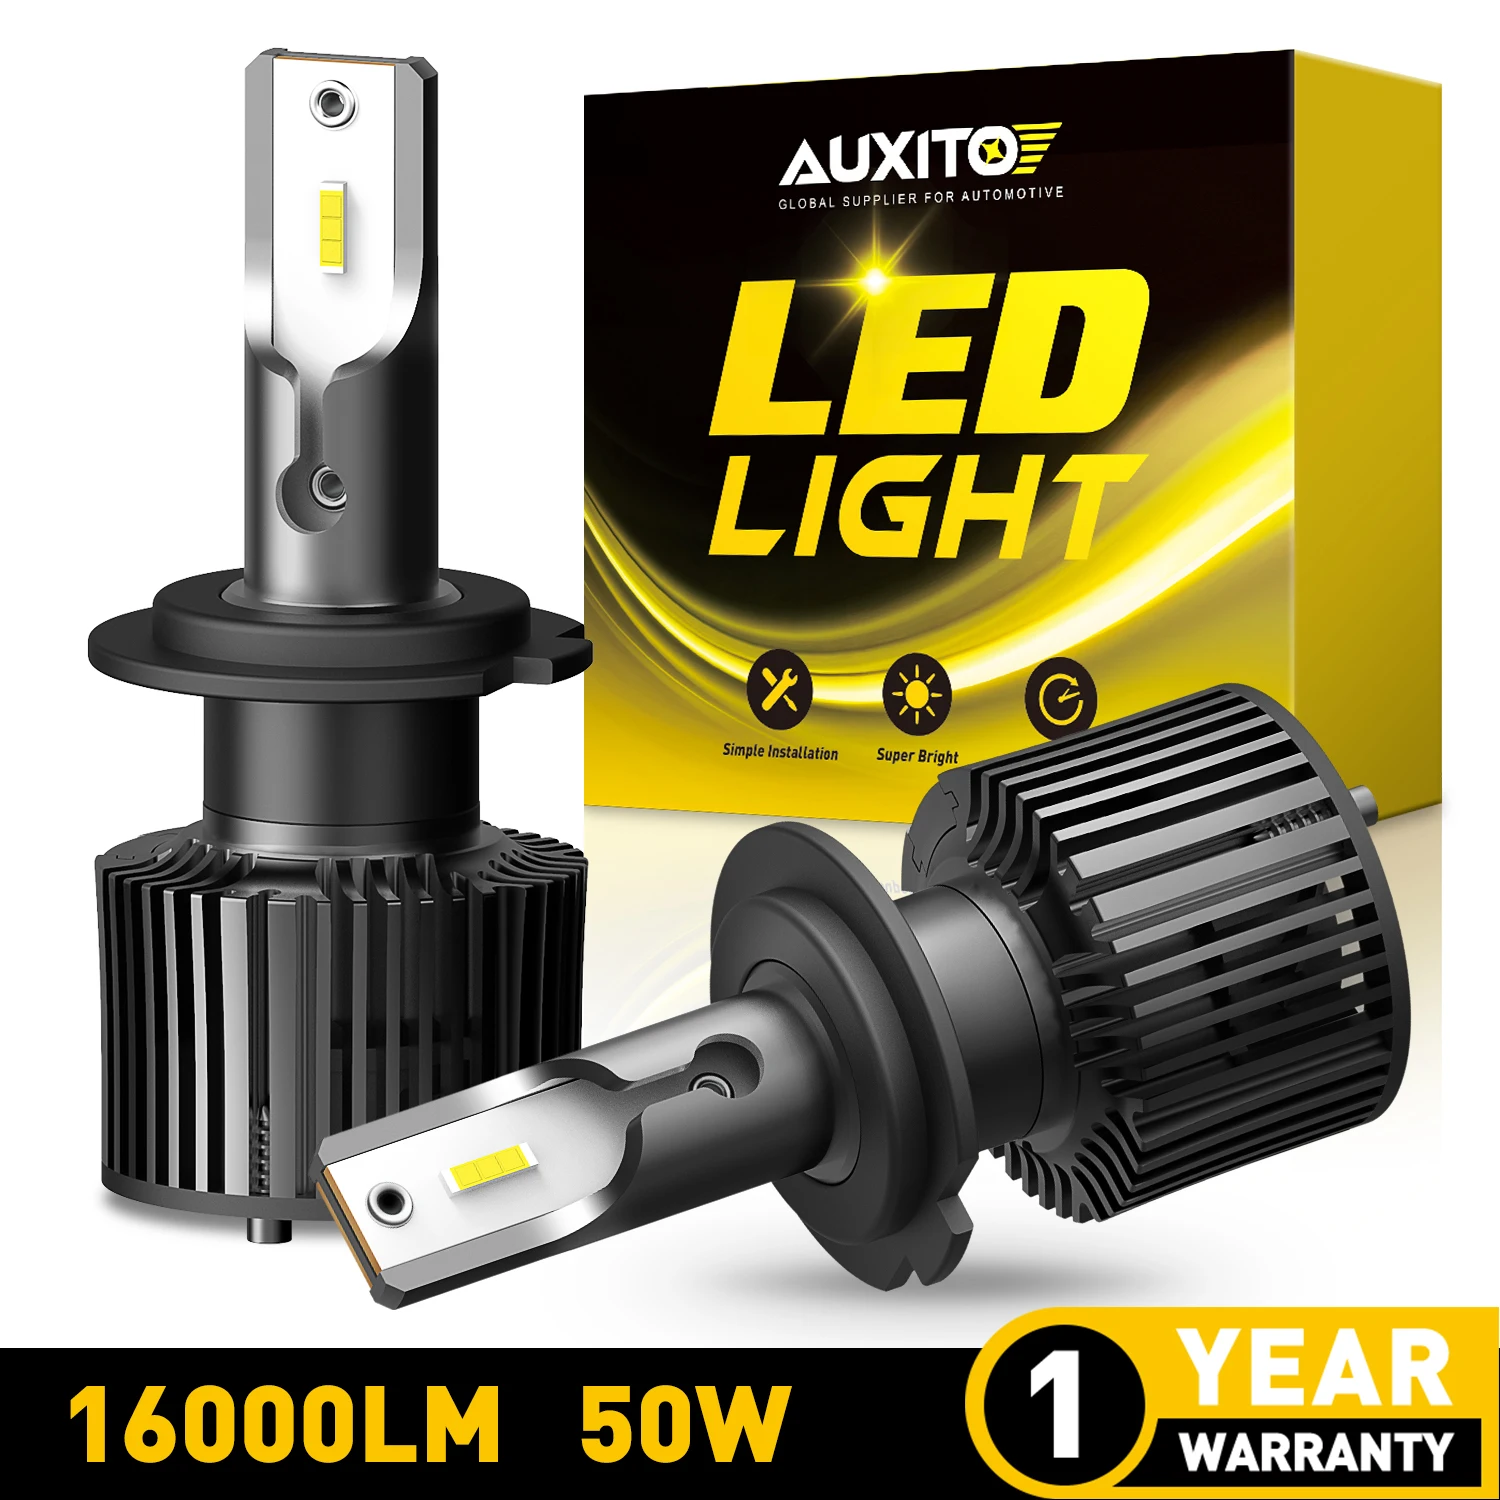 AUXITO 2x H4 LED головной светильник H1 H7 светодиодный CANBUS Car s лампа H11 H8 турсветильник